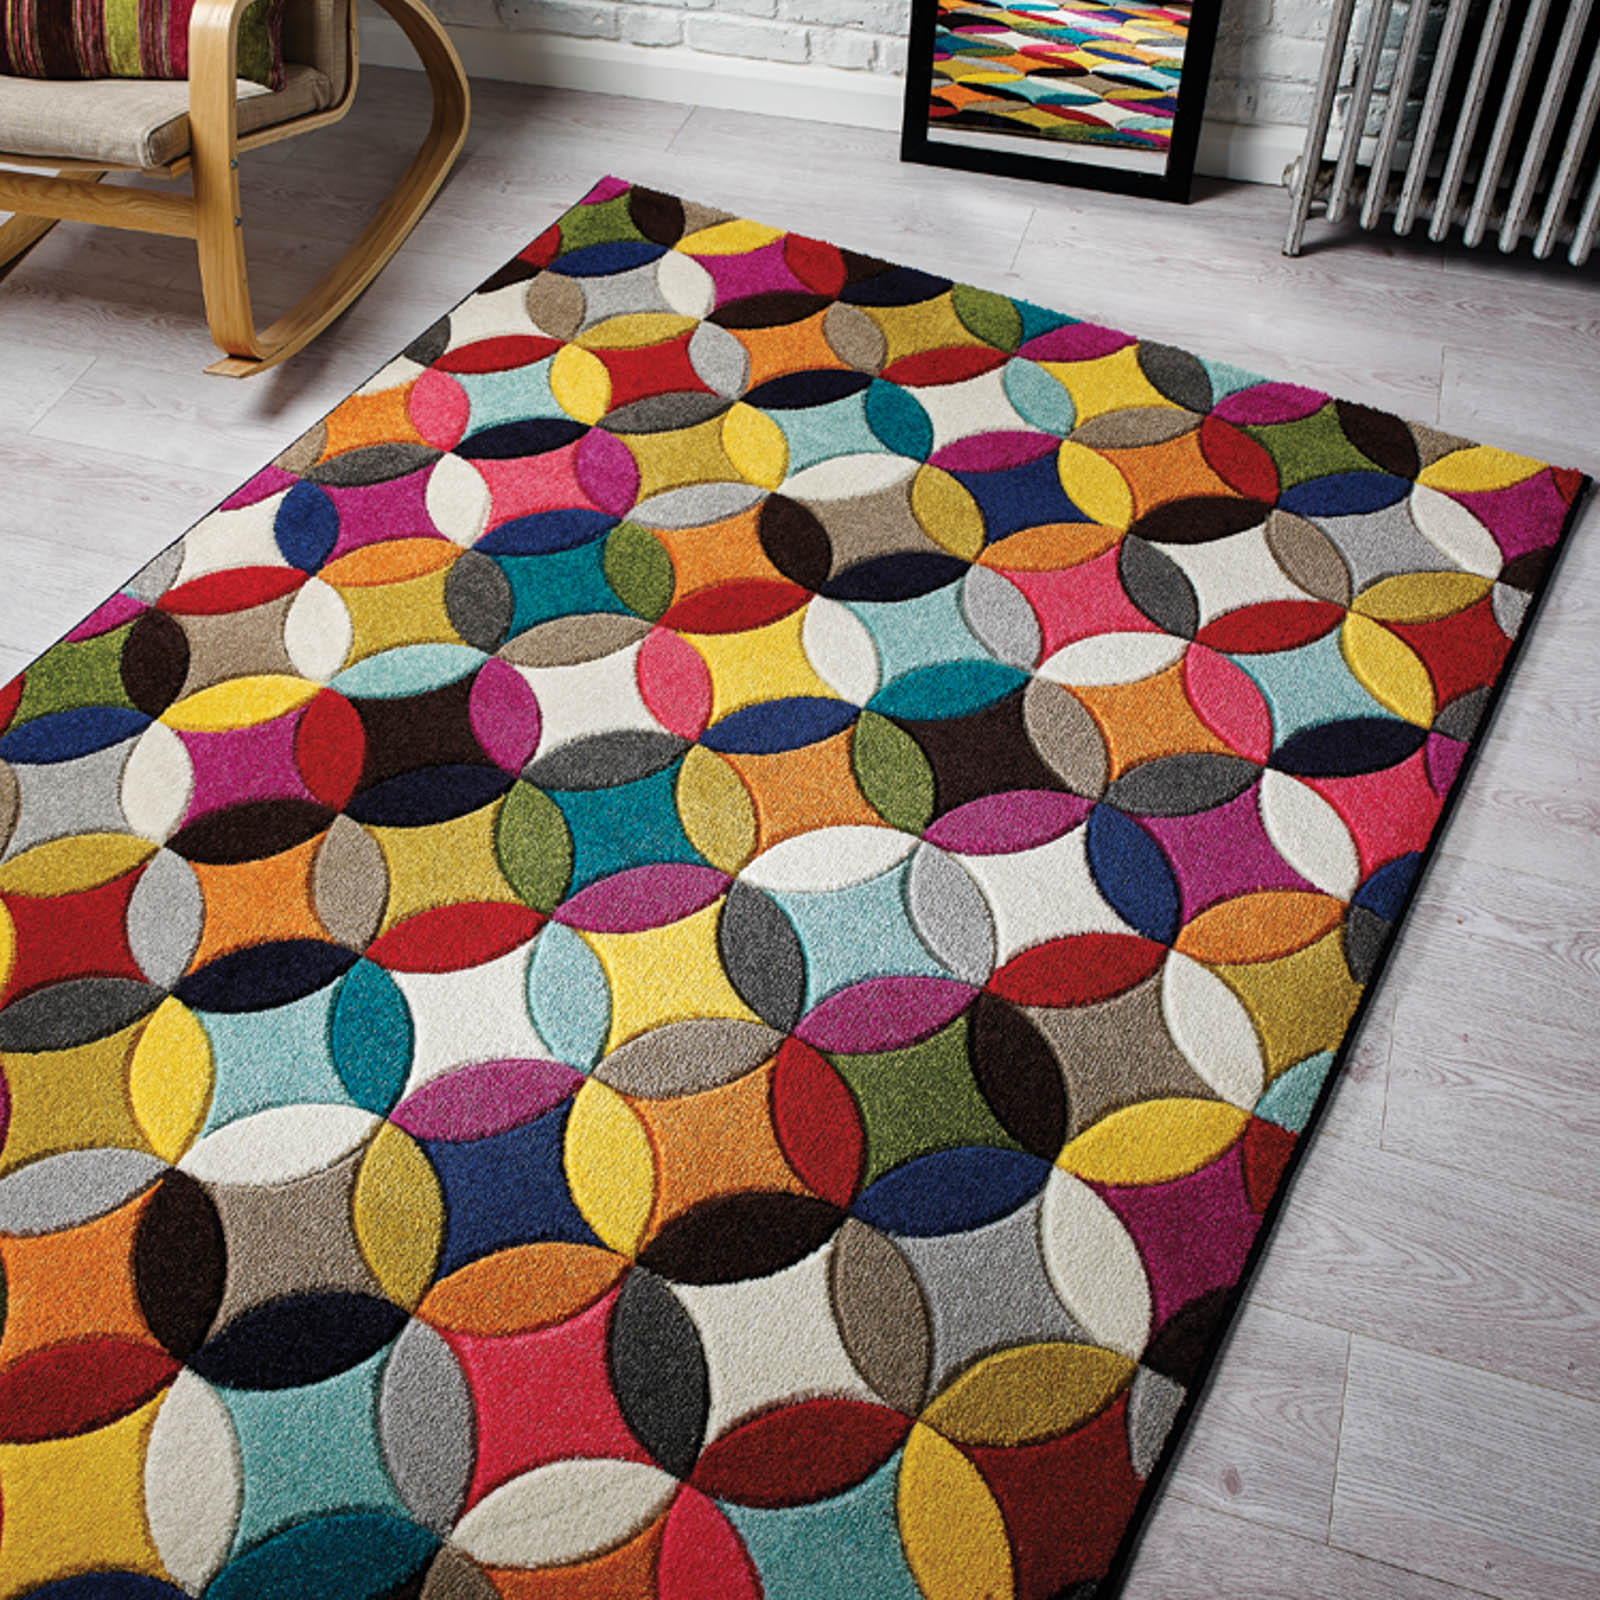 A multicoloured, circular design floor piece on a ligth grey coloured flooring